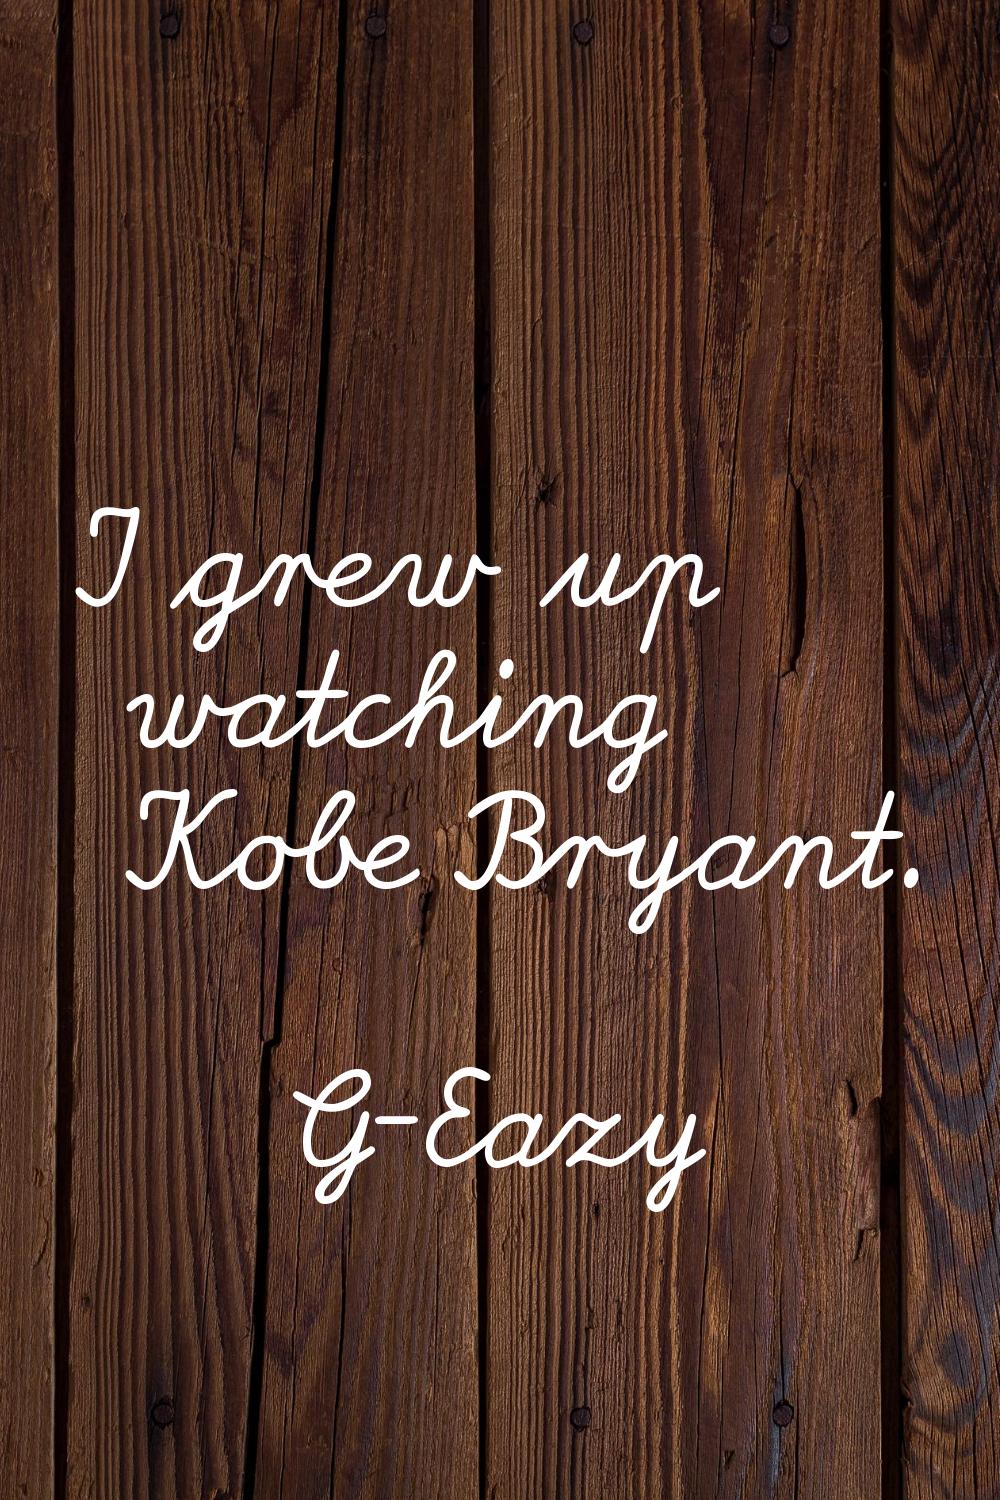 I grew up watching Kobe Bryant.